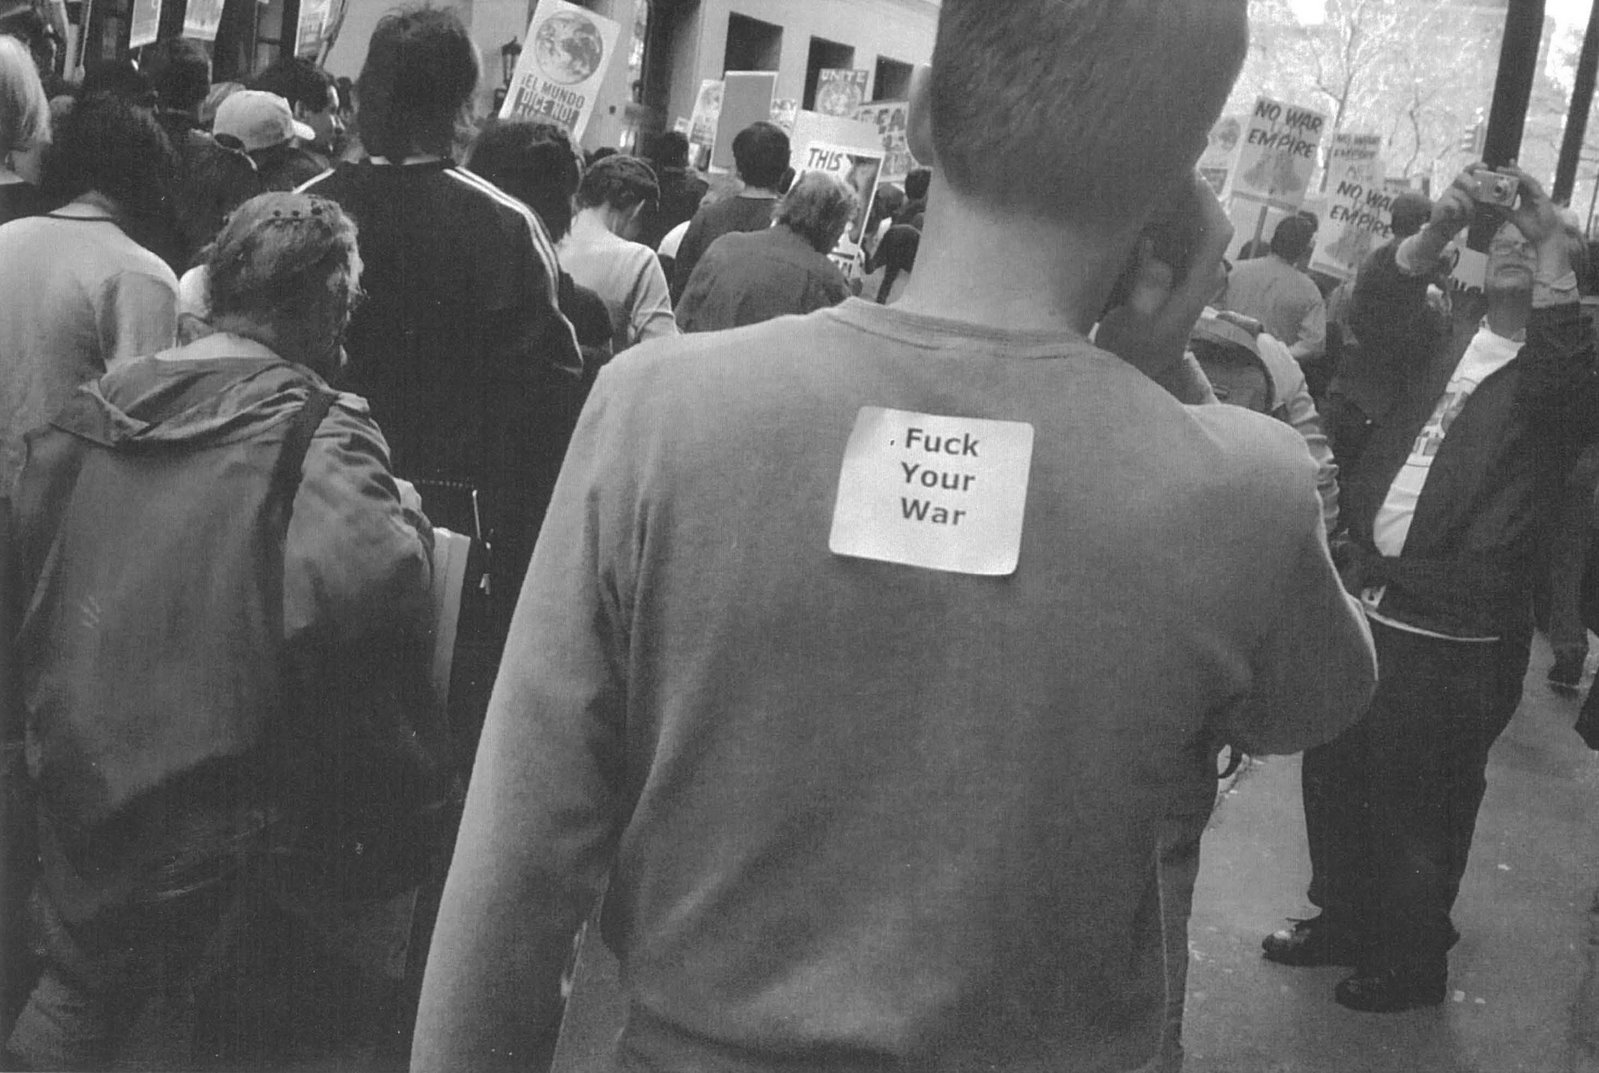 [F+your+war+photo+taken+during+protest+jpg.jpg]